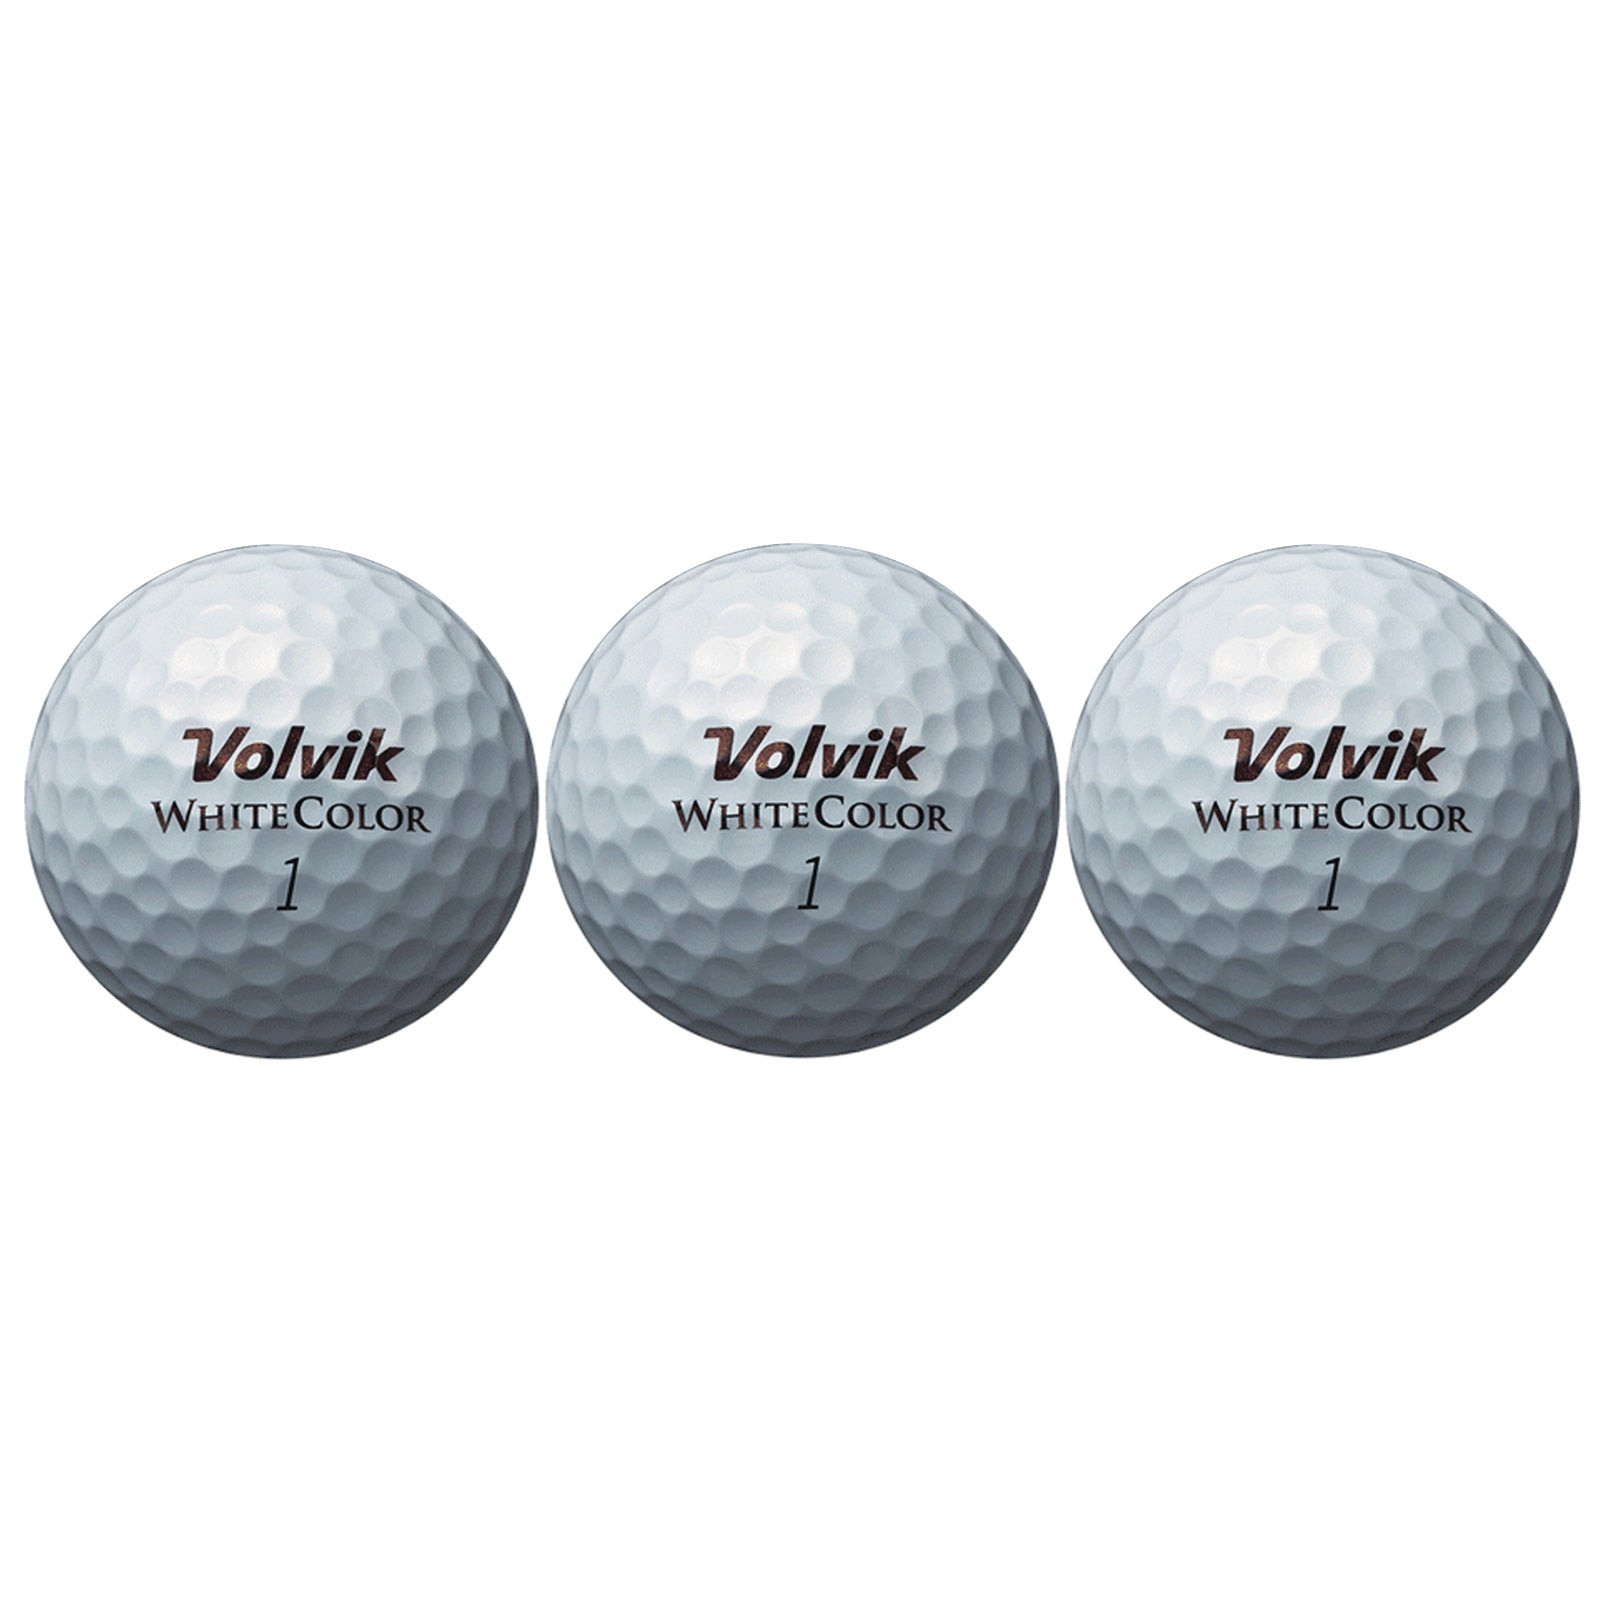 Volvik S4 Golf Balls